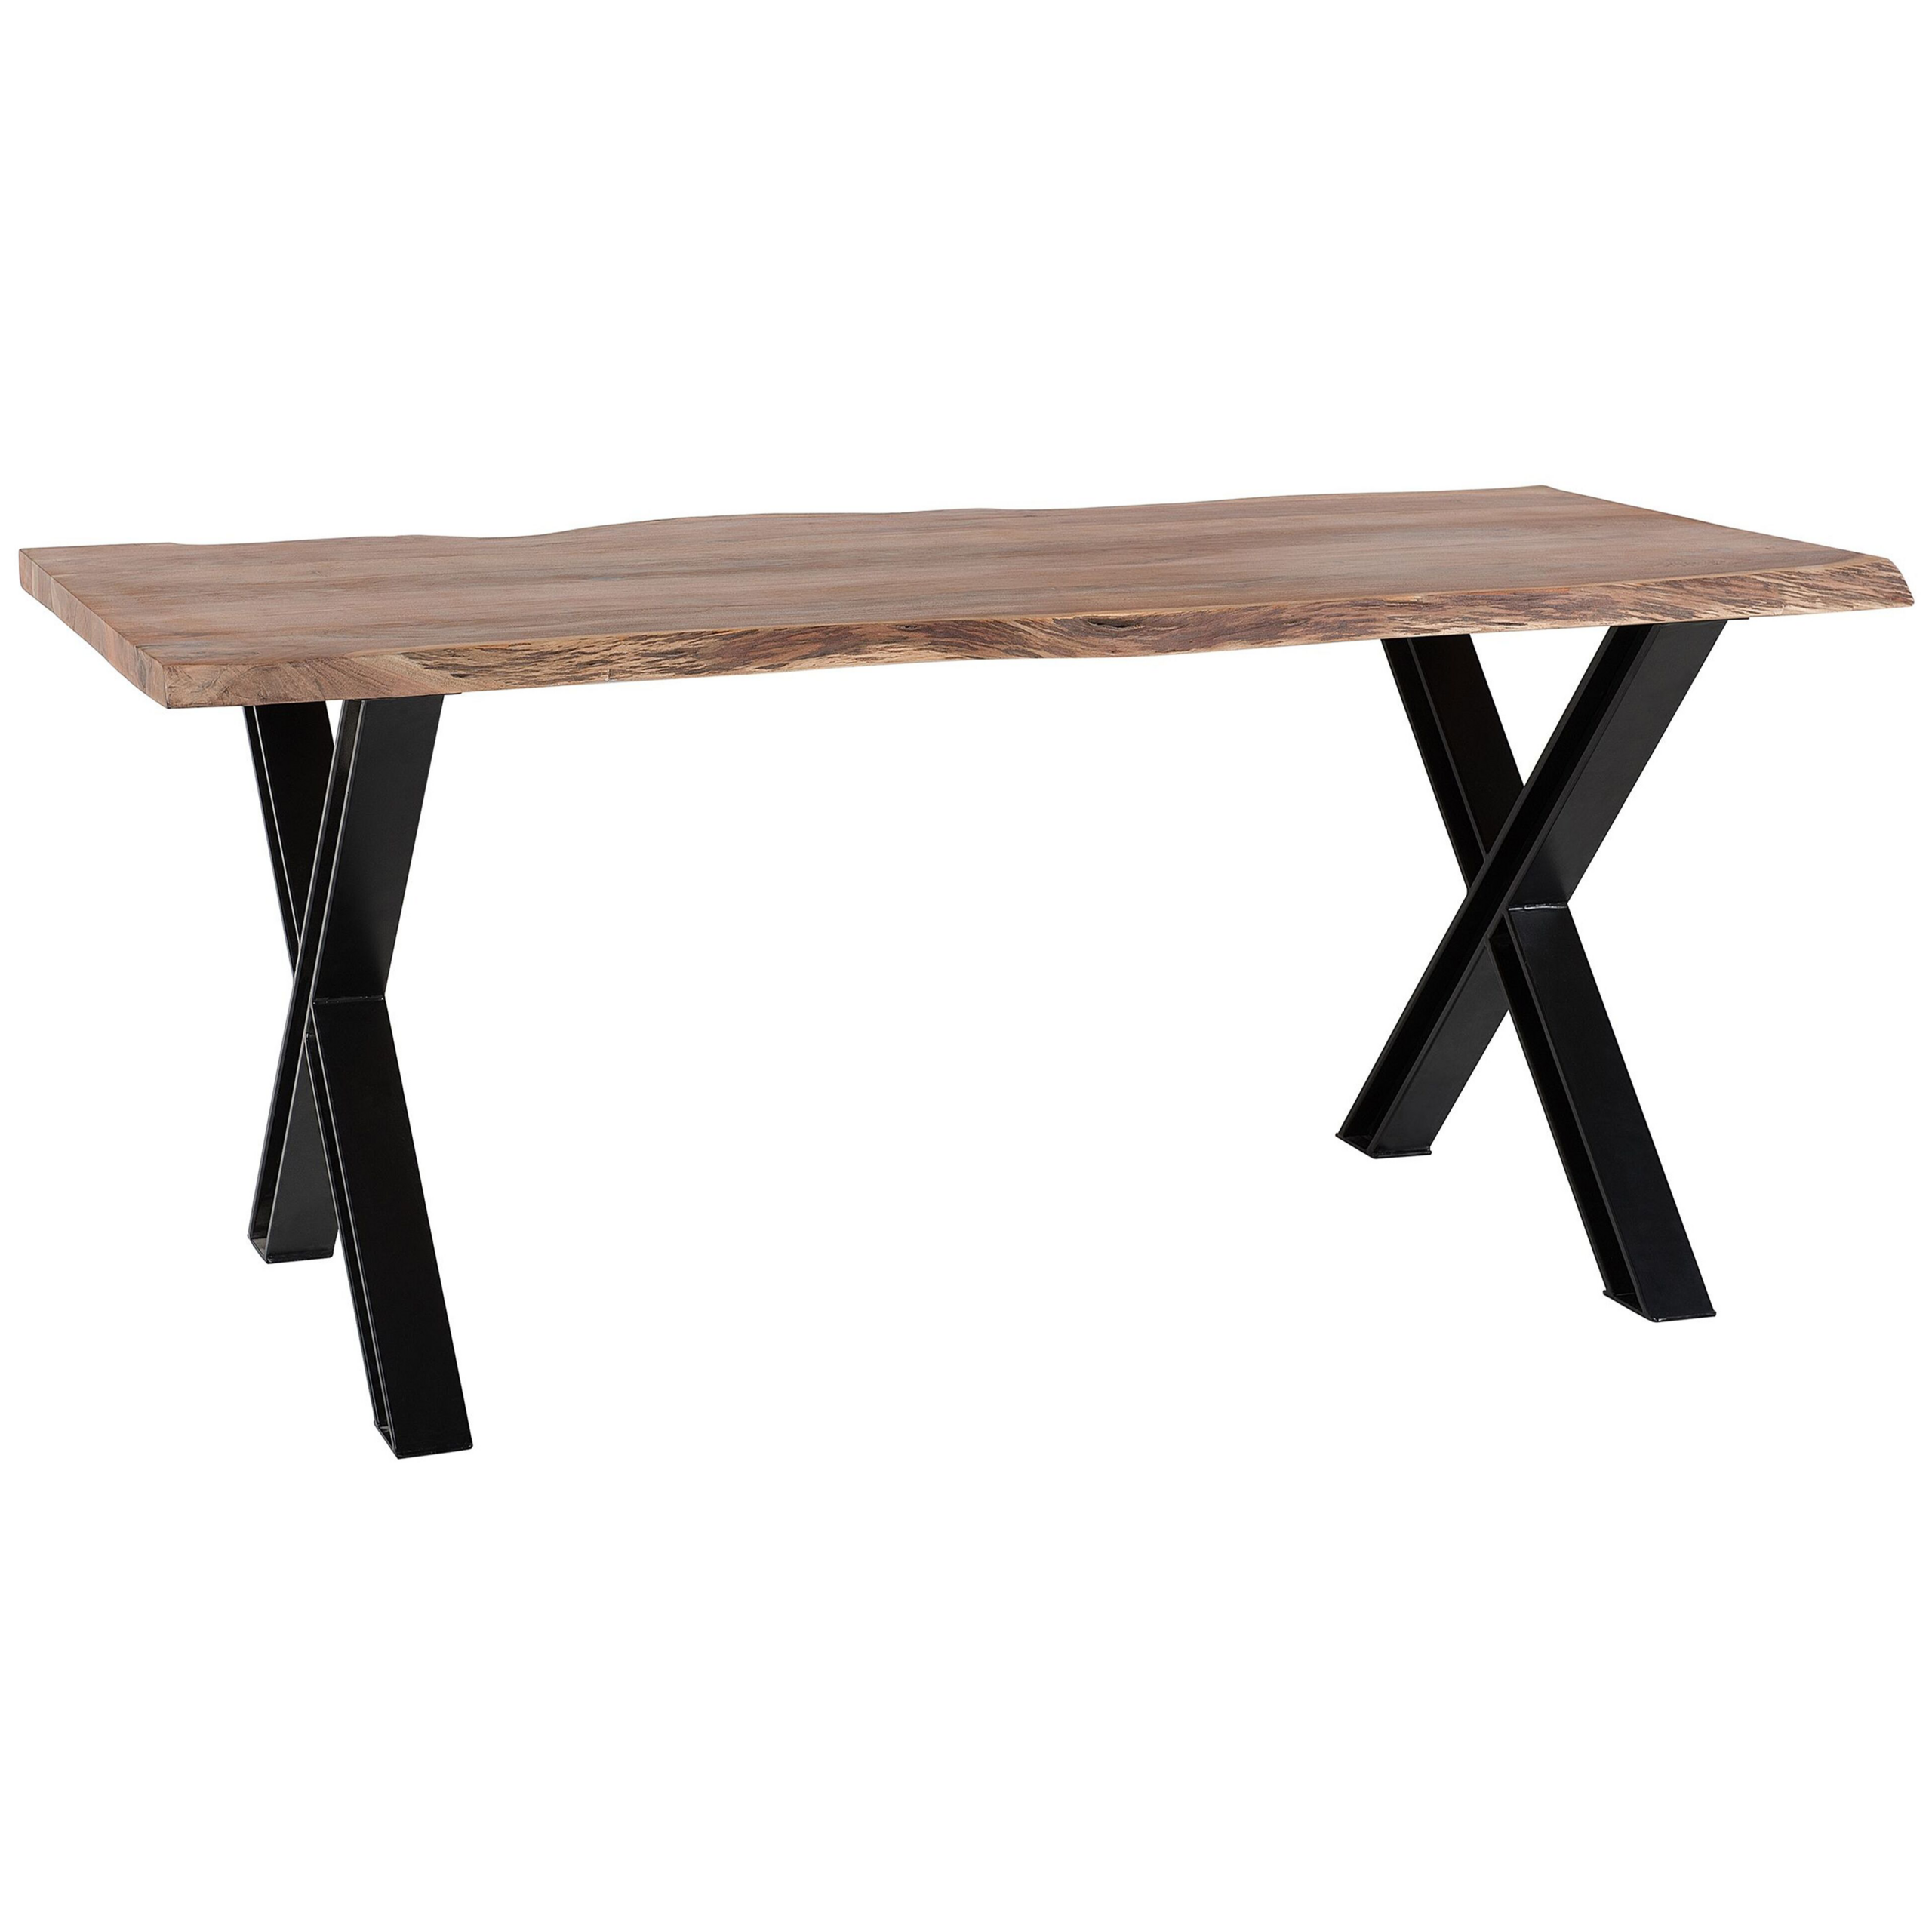 Beliani Dining Table Light Wood 180 x 95 cm Solid Wood Top Live Edge Black Metal Base Modern Industrial